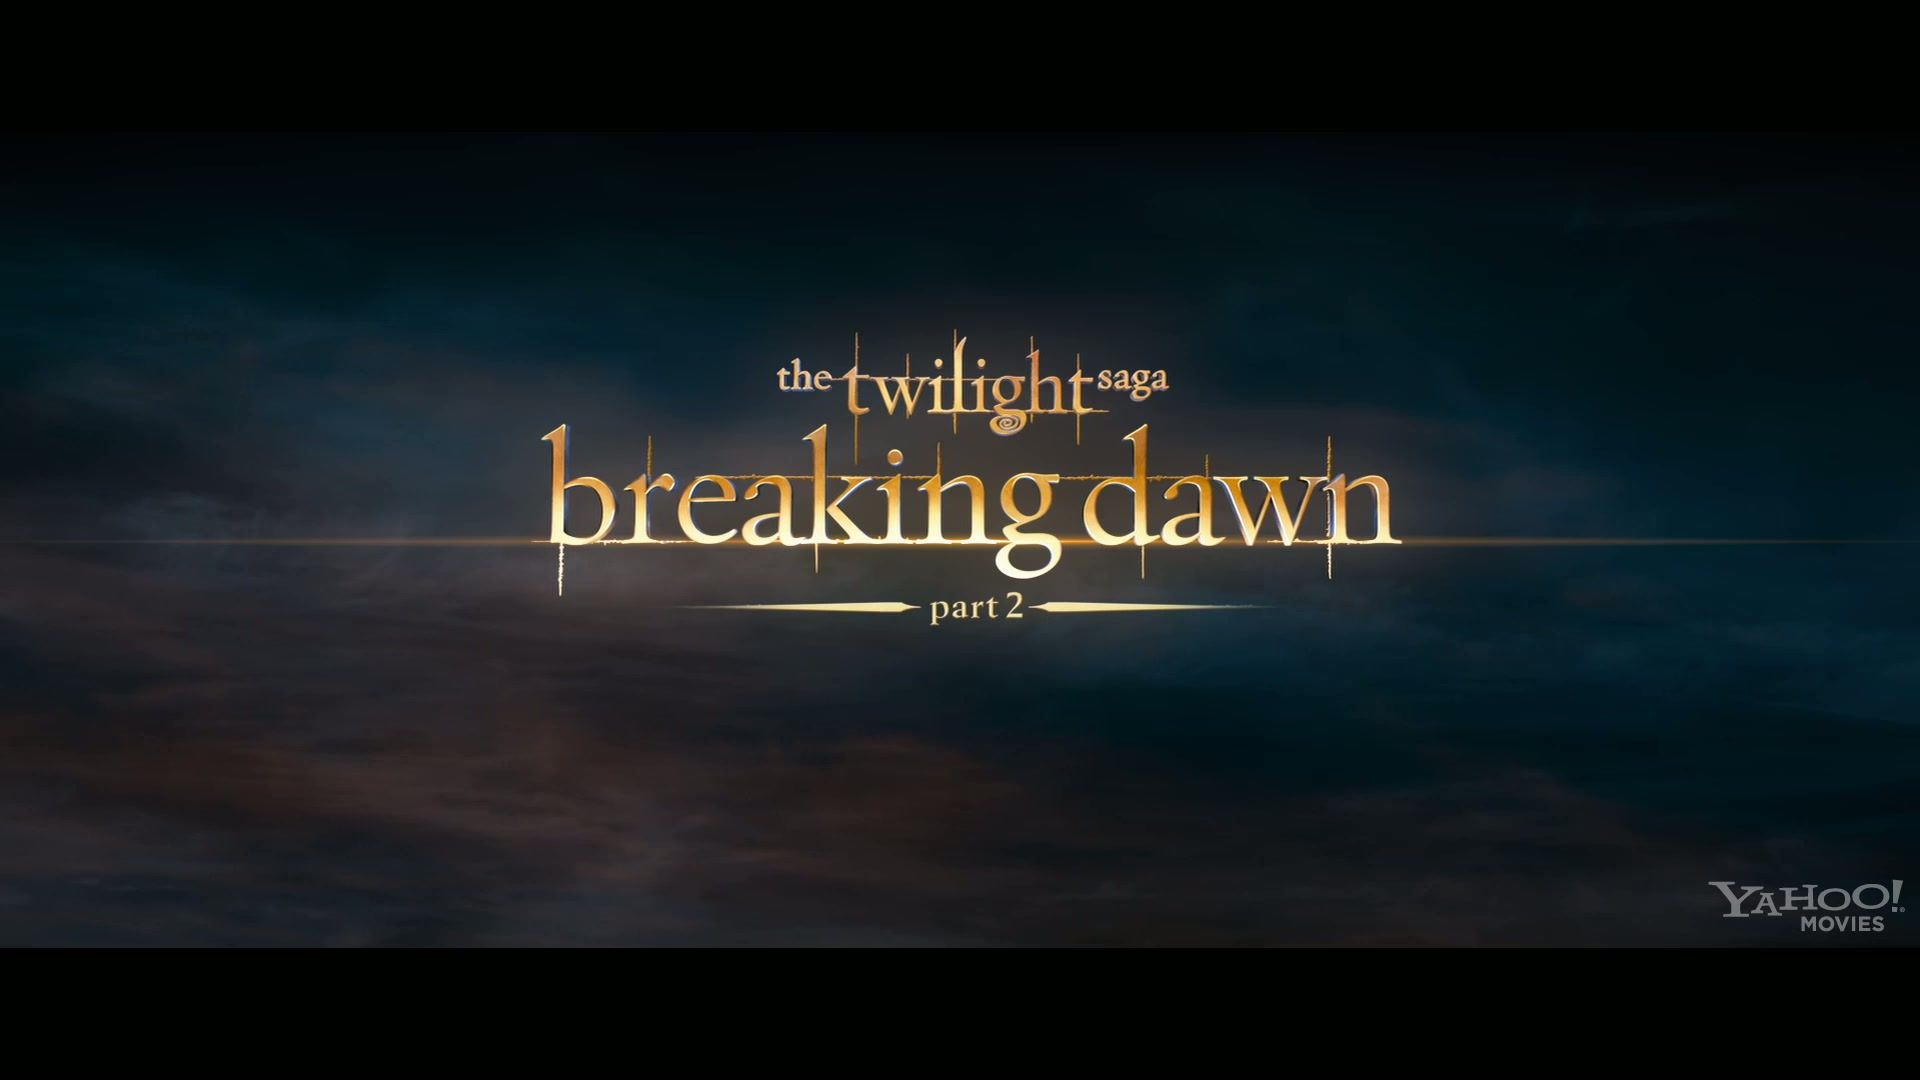 twilight saga, Crepúsculo, Robert Pattinson, promoo, diseño